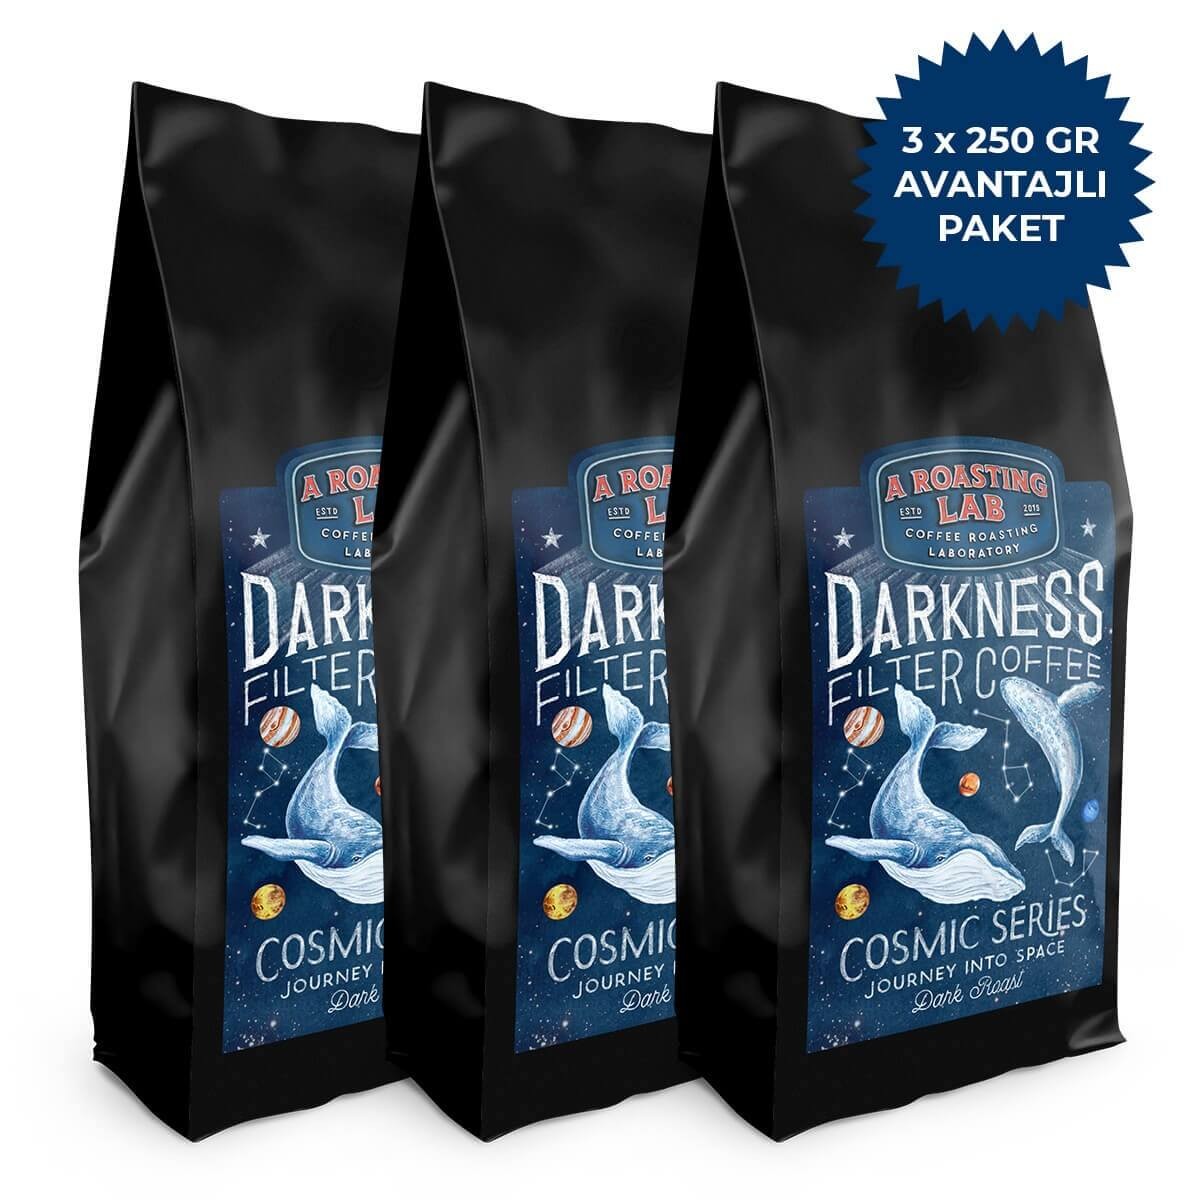 A Roasting Lab Darkness Filter Blend 3x250 Gr Öğütülmüş Filtre Kahve